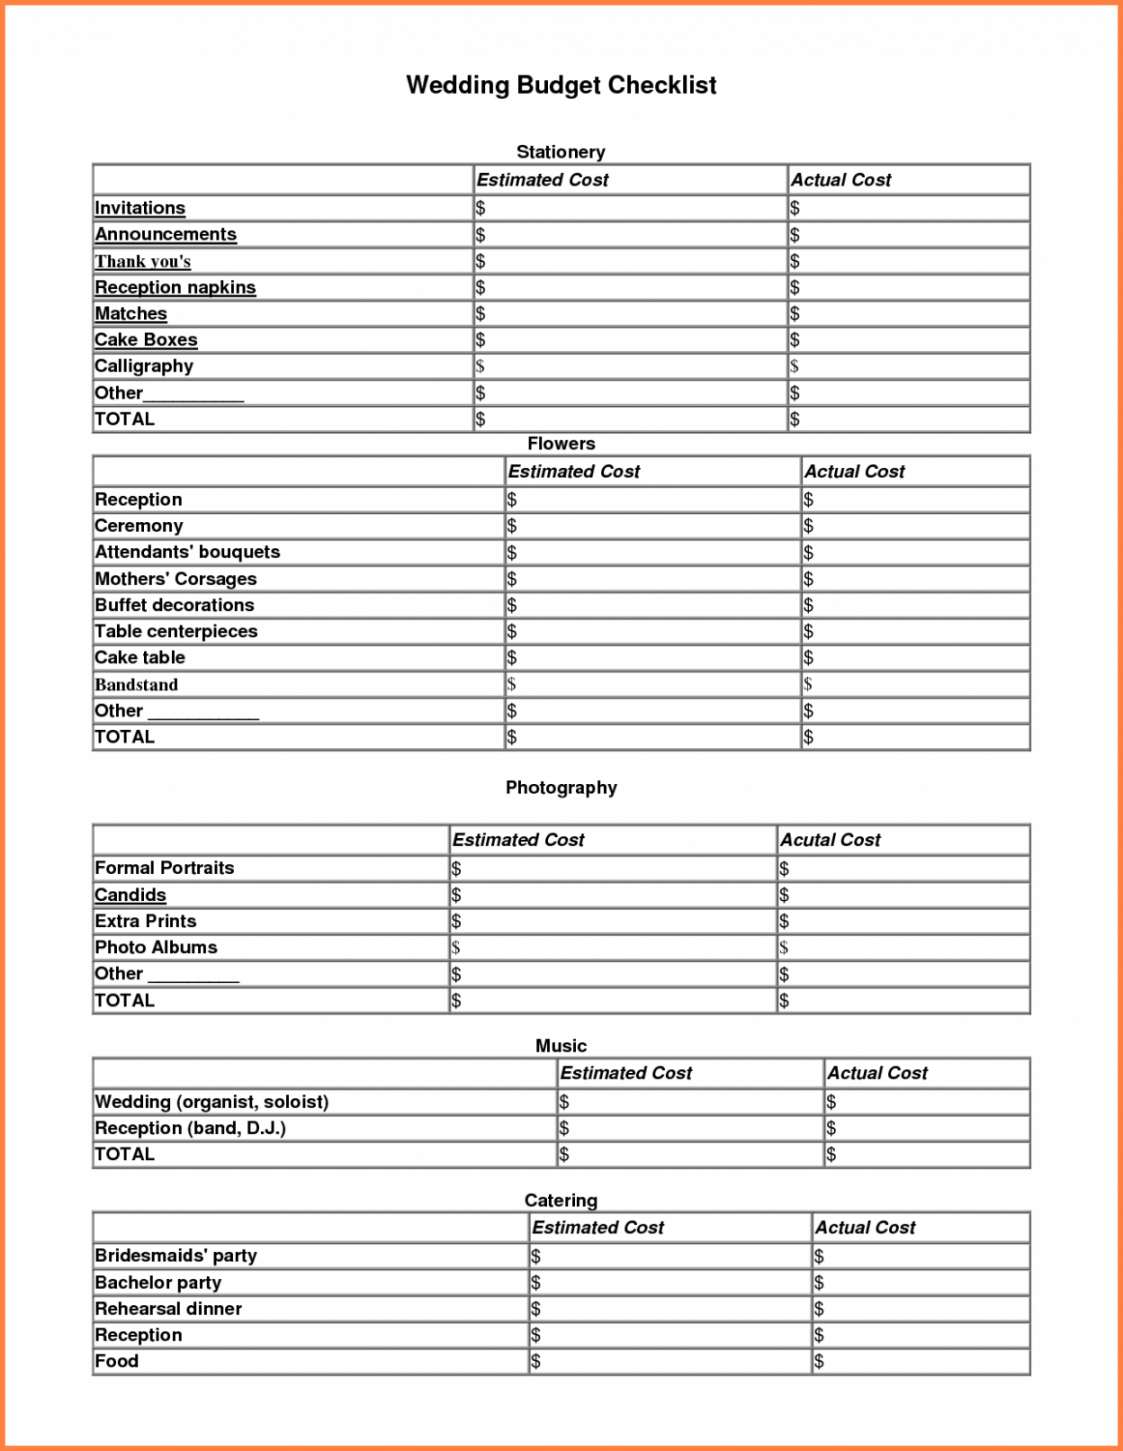 free wedding decoracion checklist check lists  bridesmaid outfit wedding decoration checklist template doc